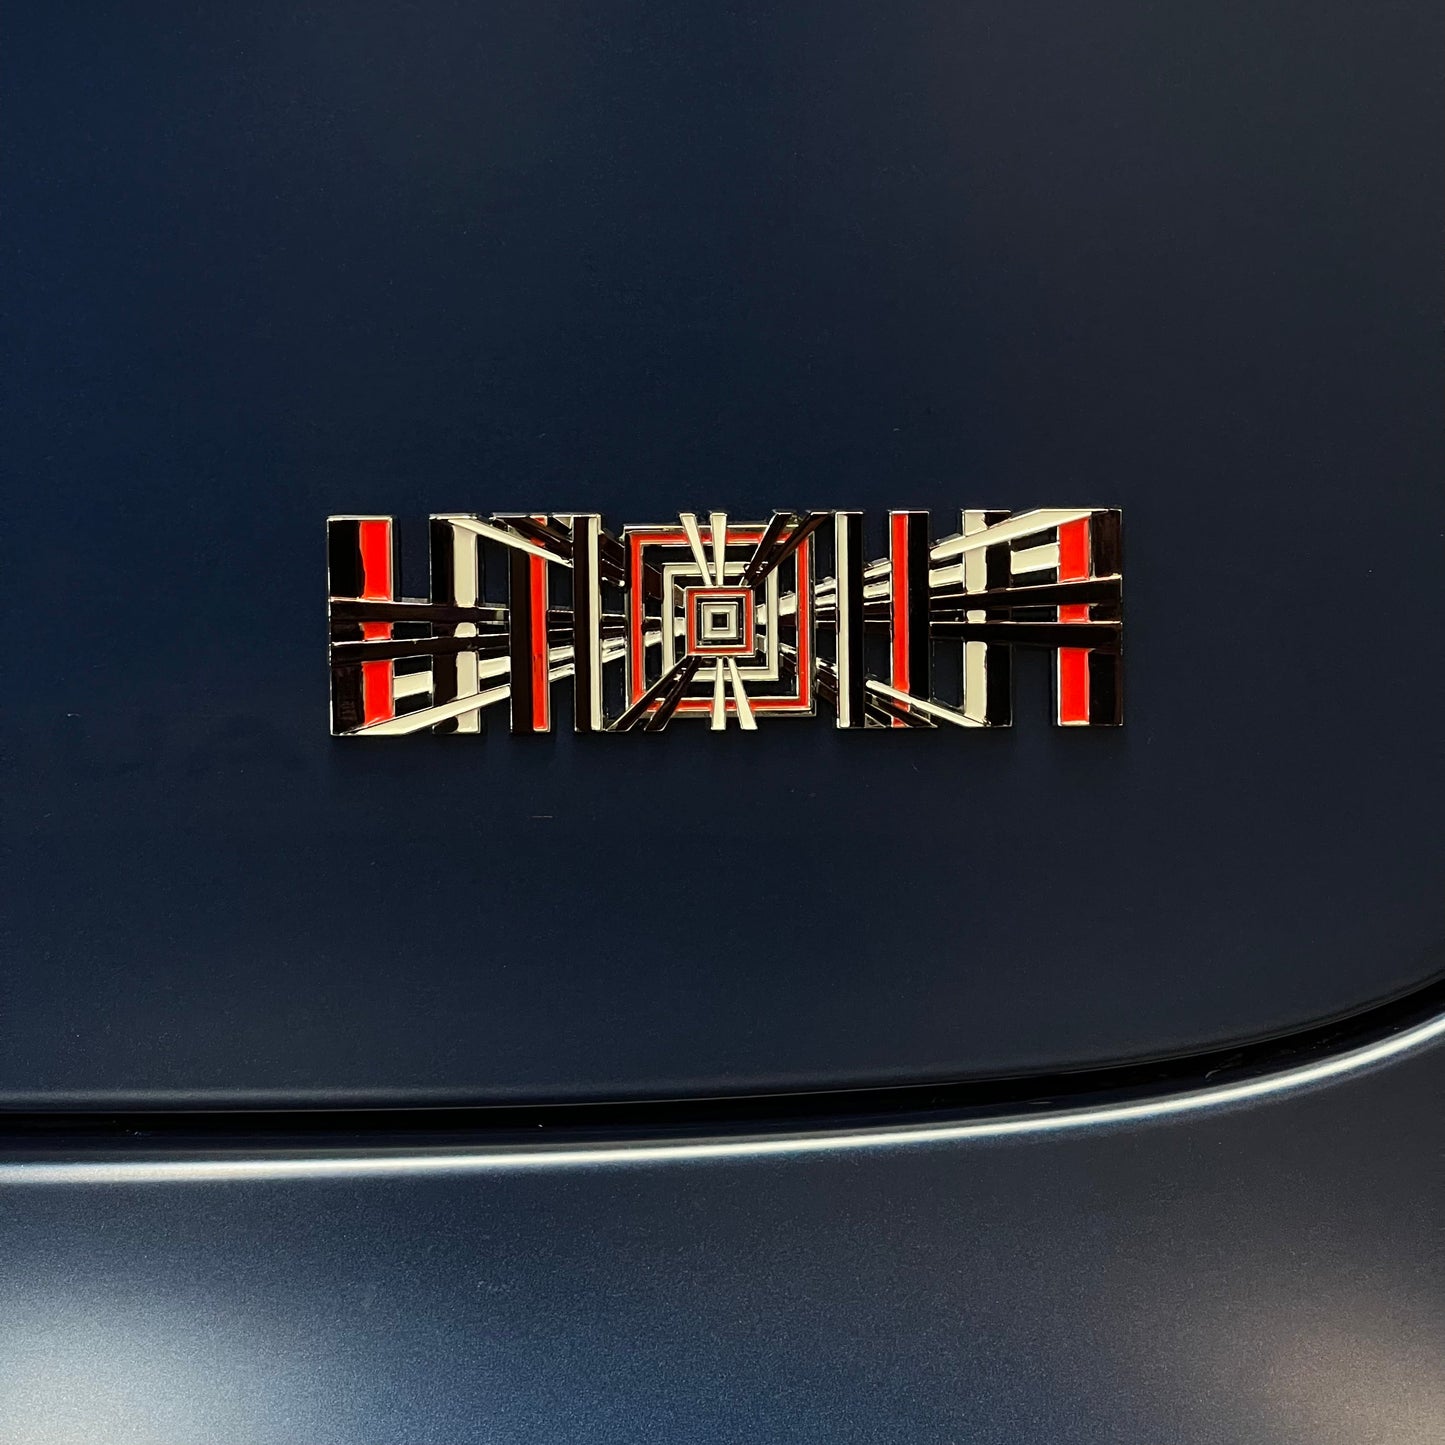 Tesla Plaid emblem / badge